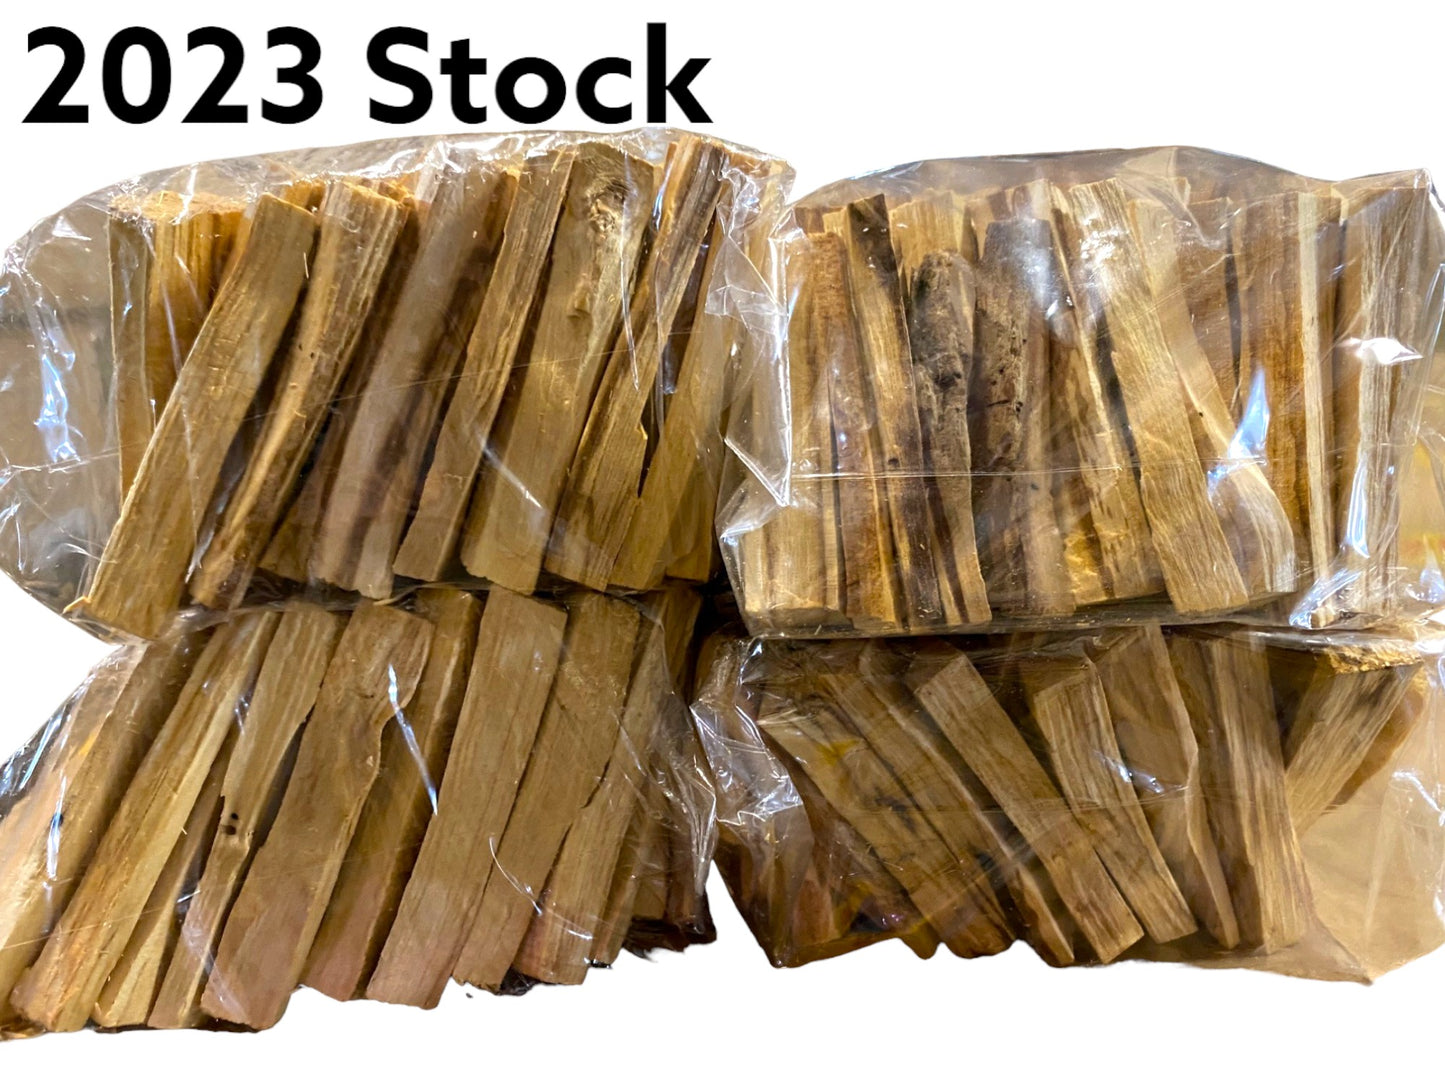 1 KG PALO SANTO HOLY WOOD STICKS - Grade A - (Approx. 105 sticks) Smudge Supplies